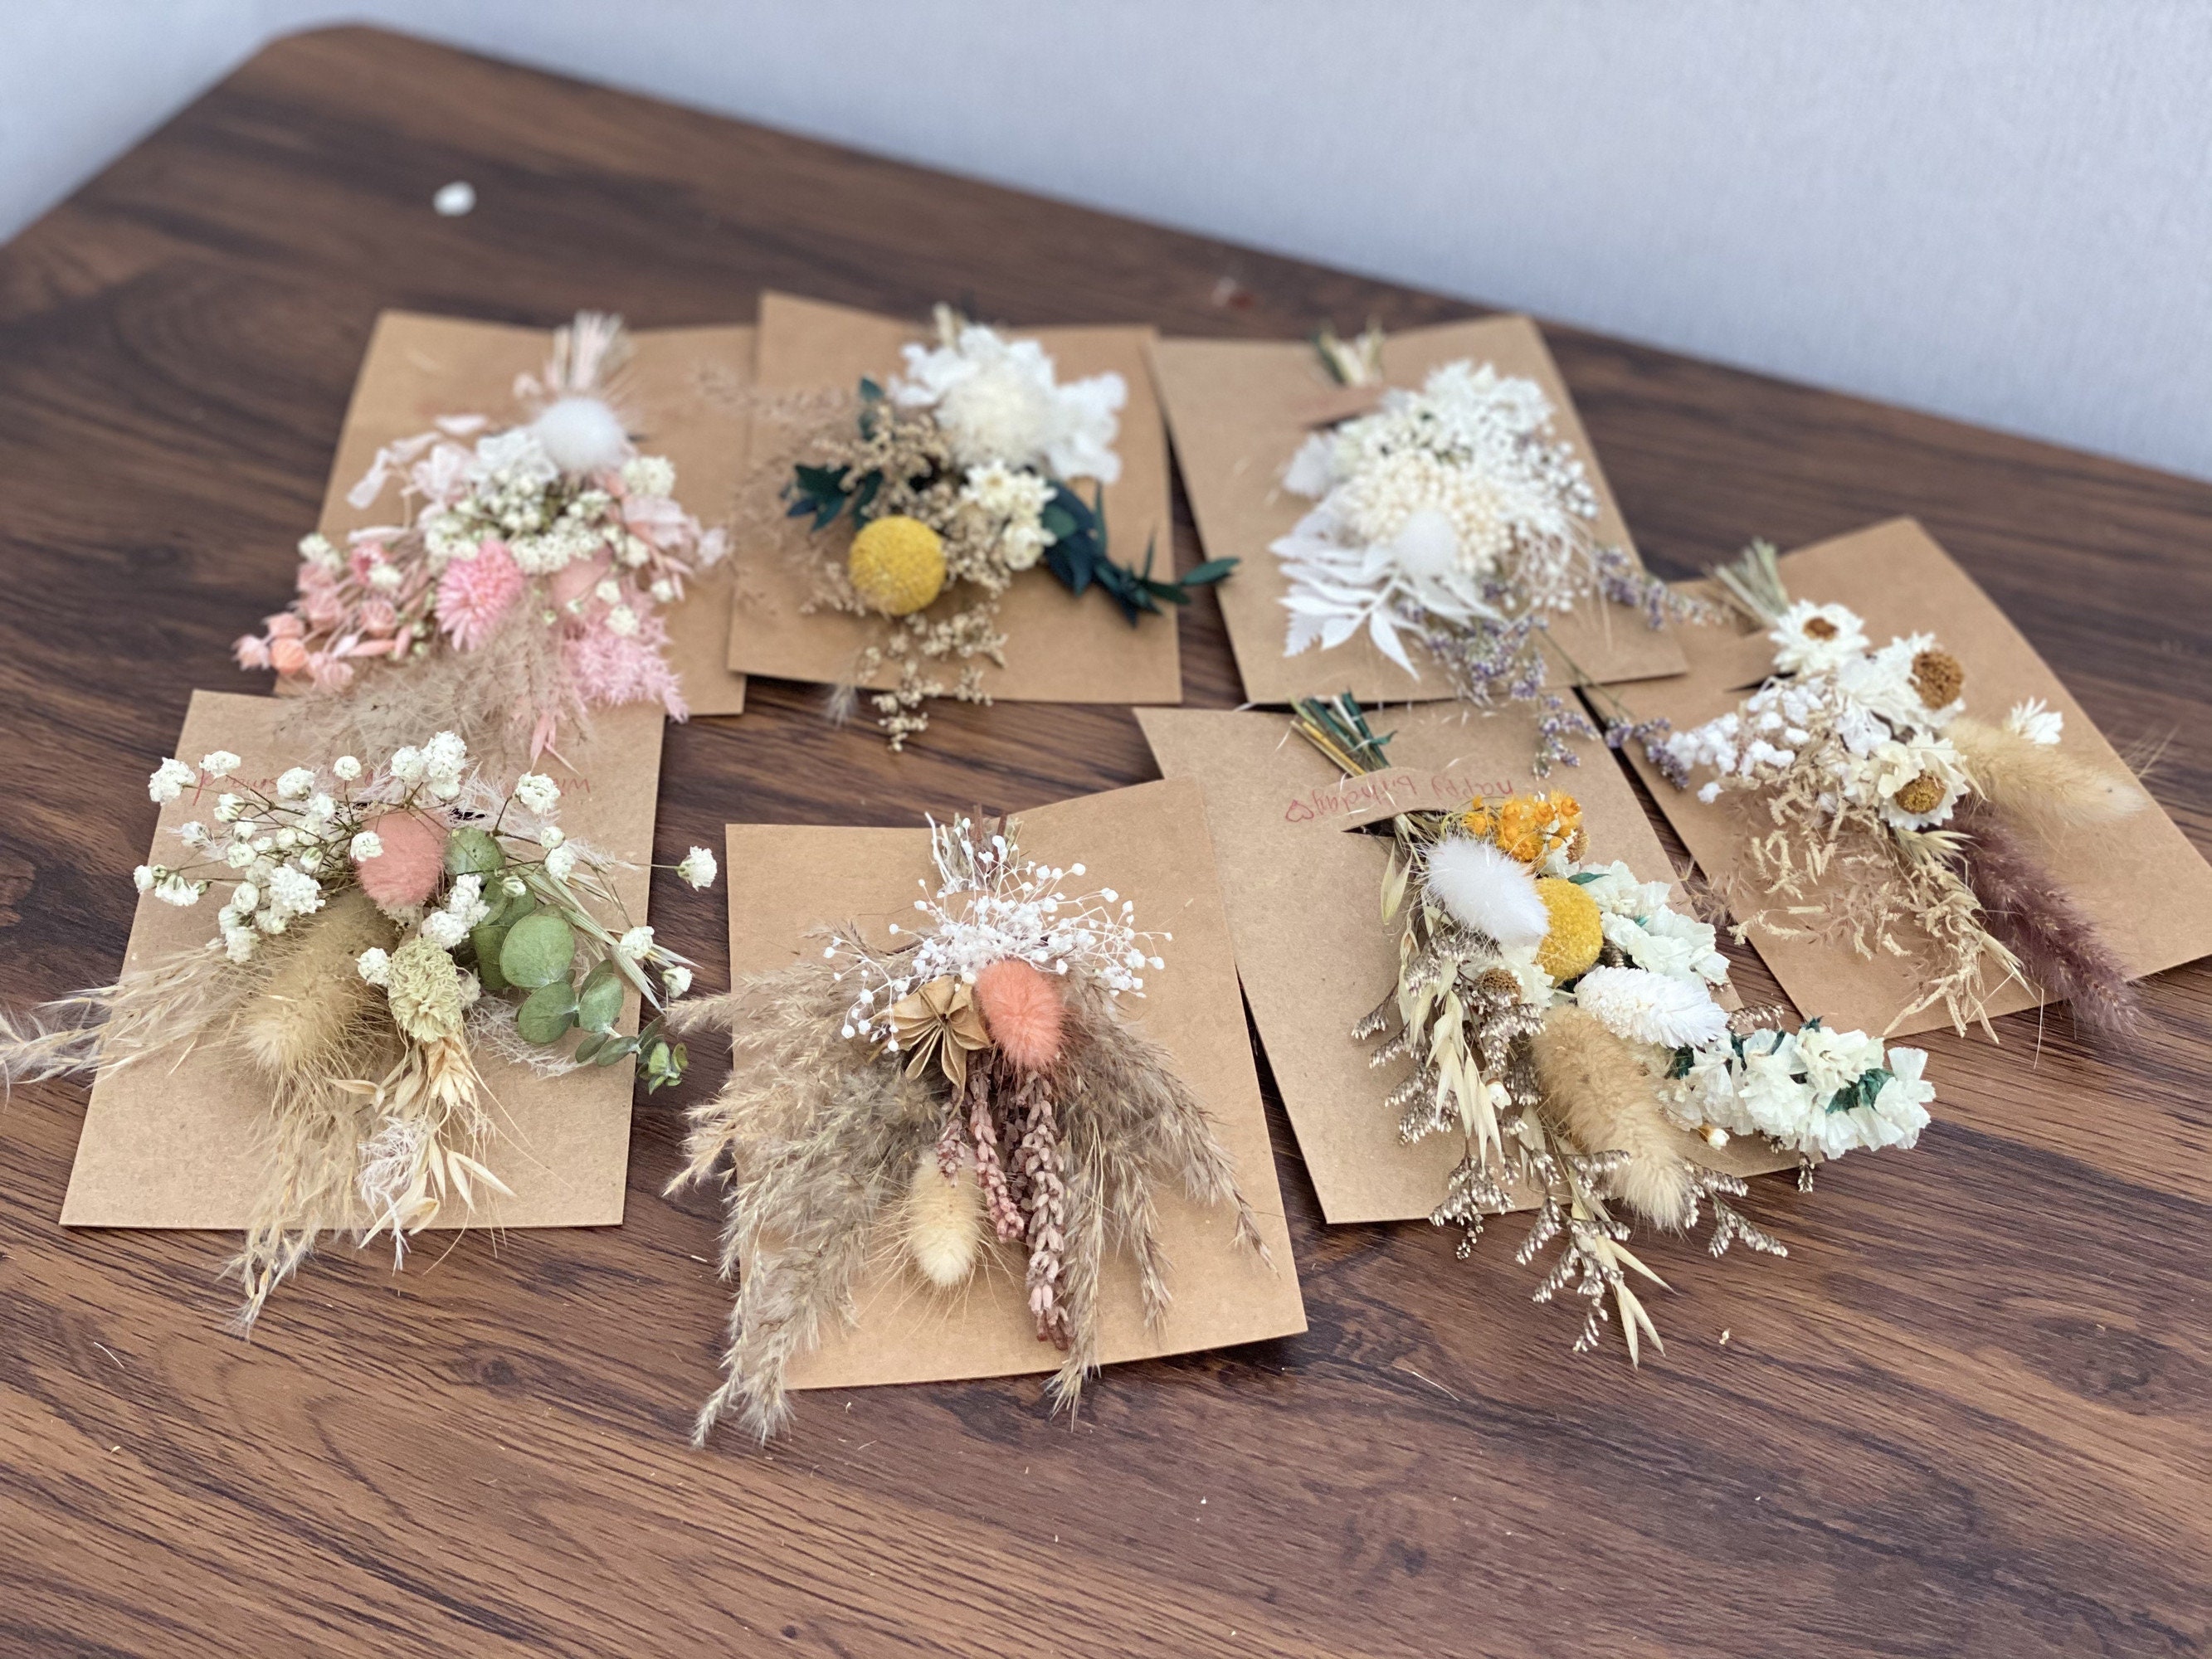  YOBEKI Mini Dried Flower Bouquet, Small Milk Bottle  Arrangement, Table Decoration, letterbox Gift, Pampas, Bunny Tails